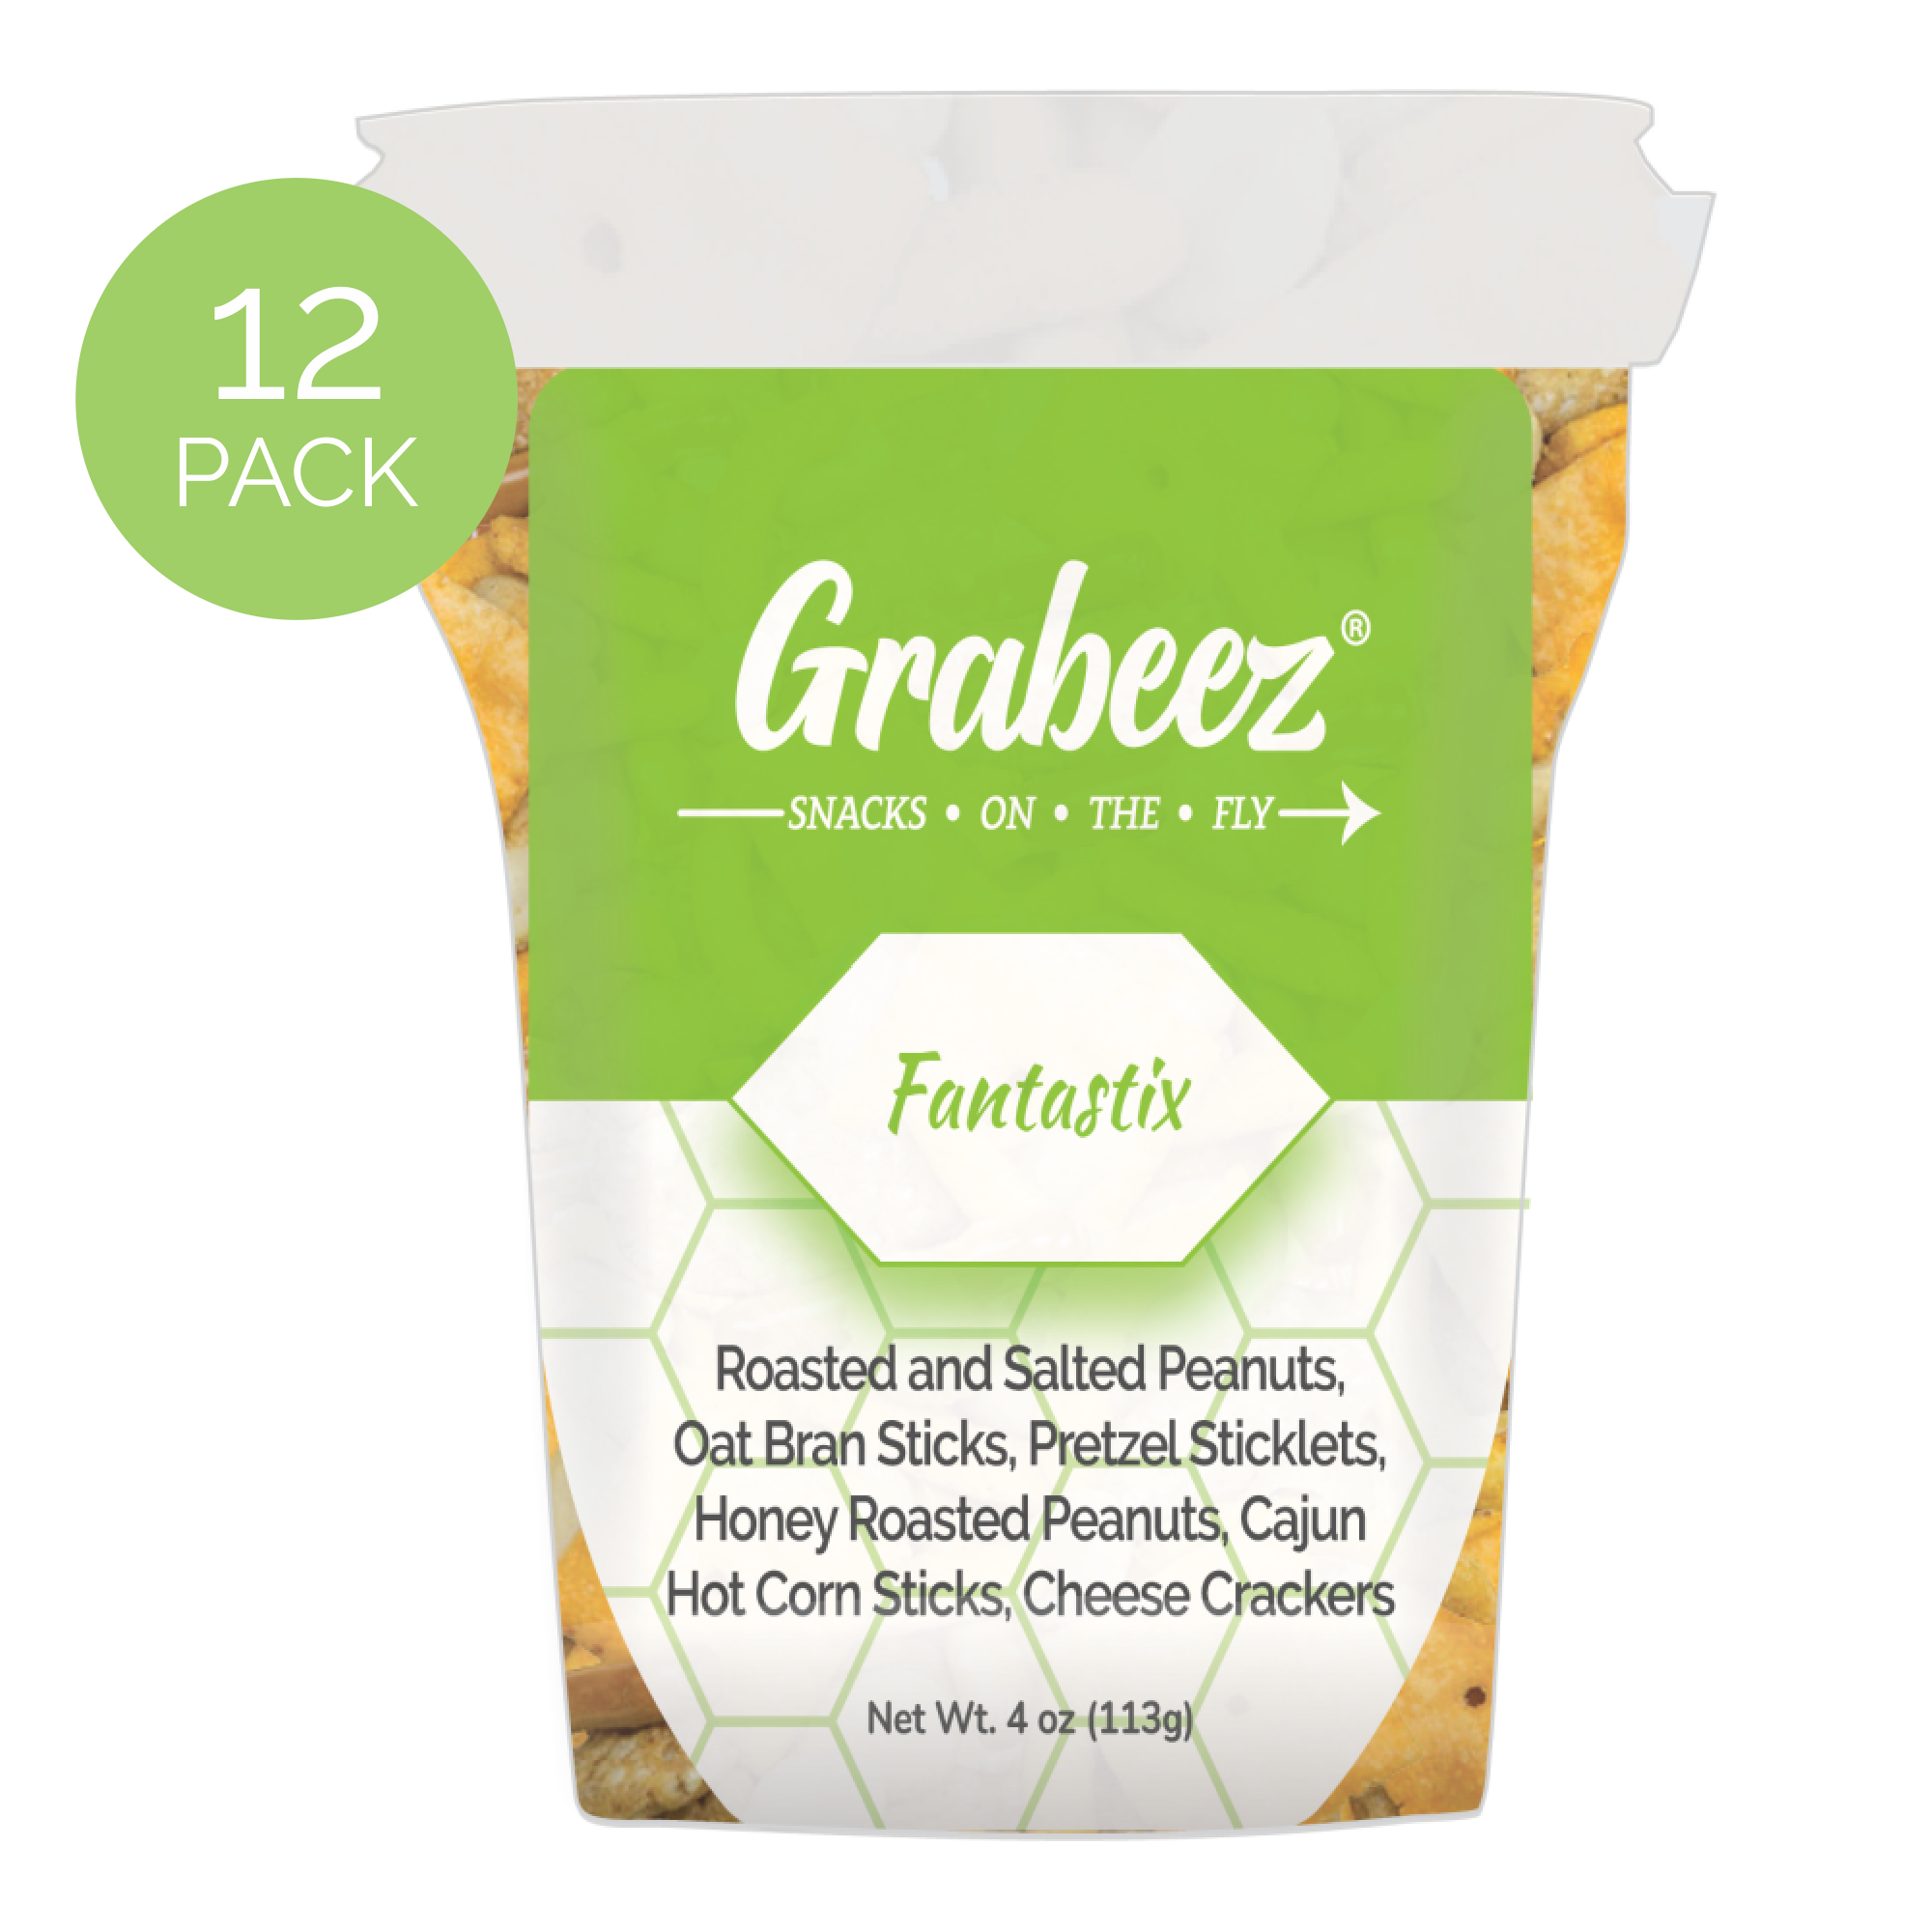 Truly Good Foods Fantastix Grabeez, 4oz, 12-Count